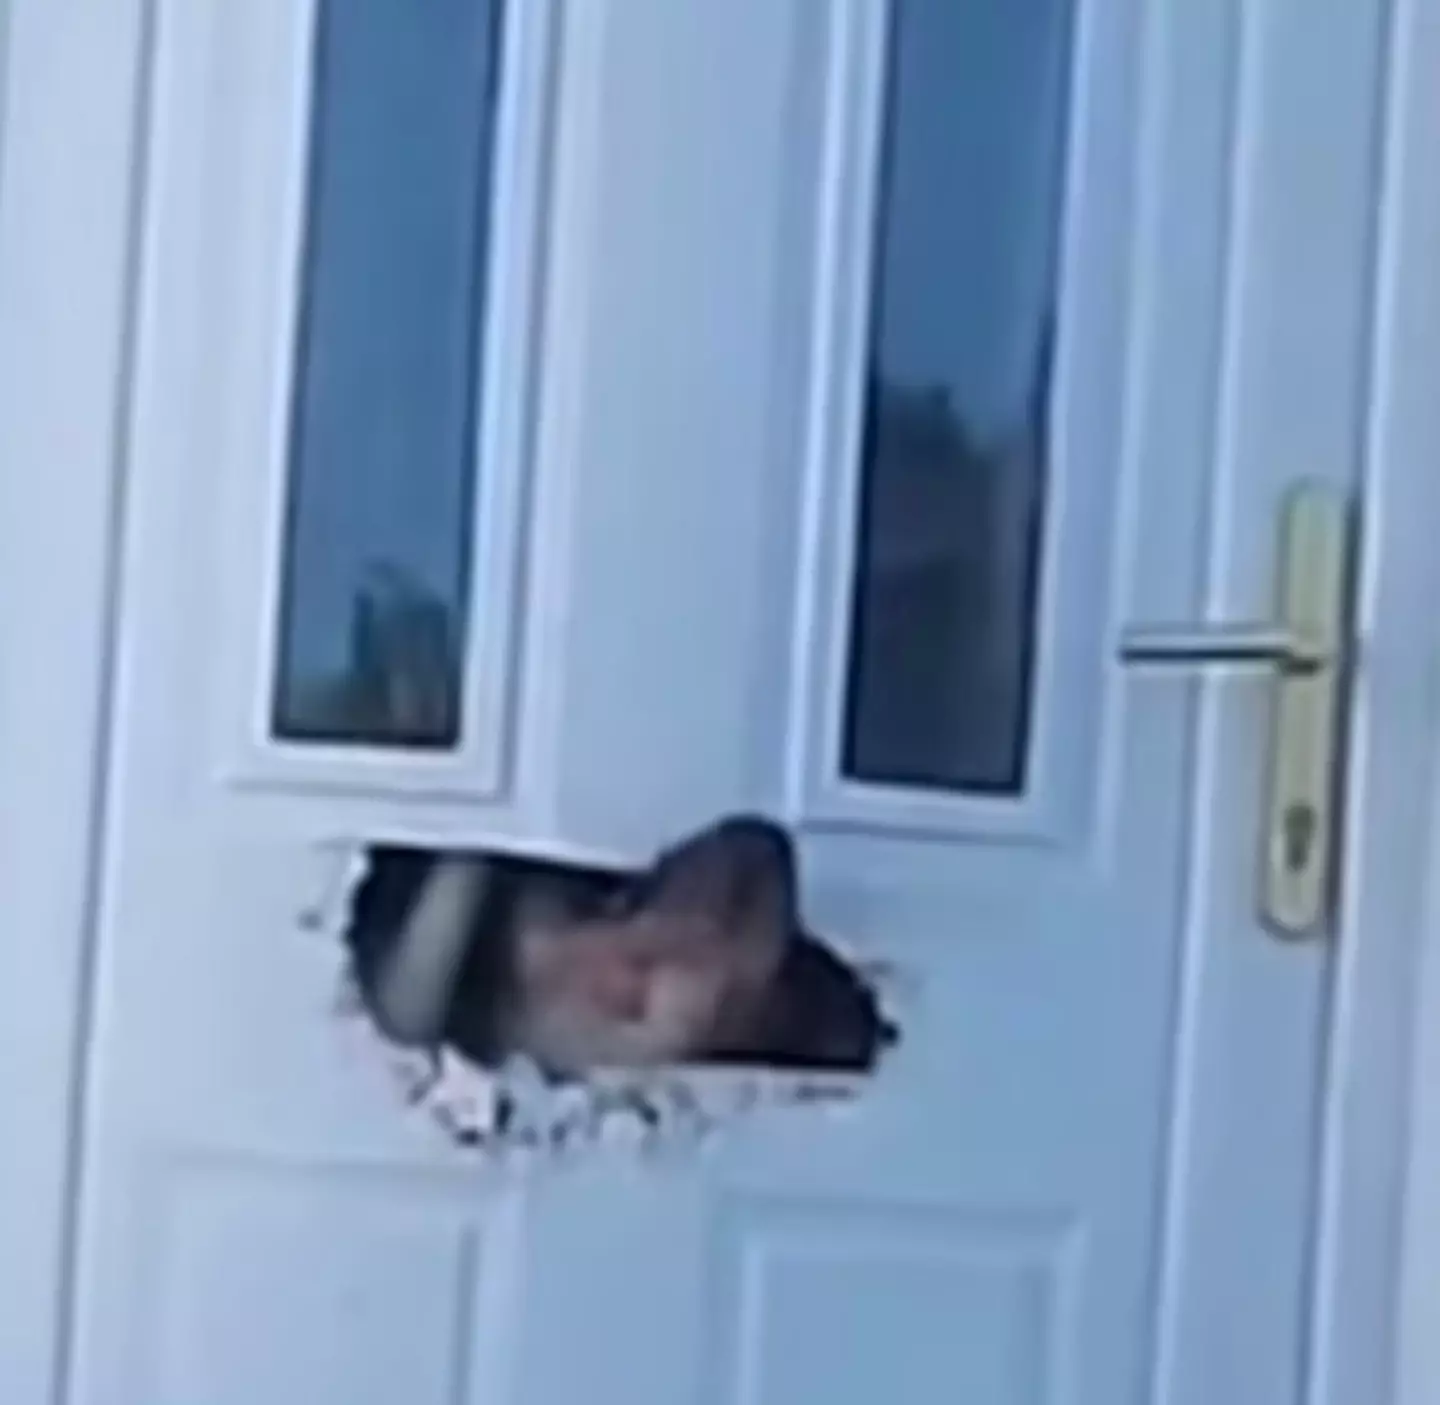 The dog was seen eating a door in Fife.